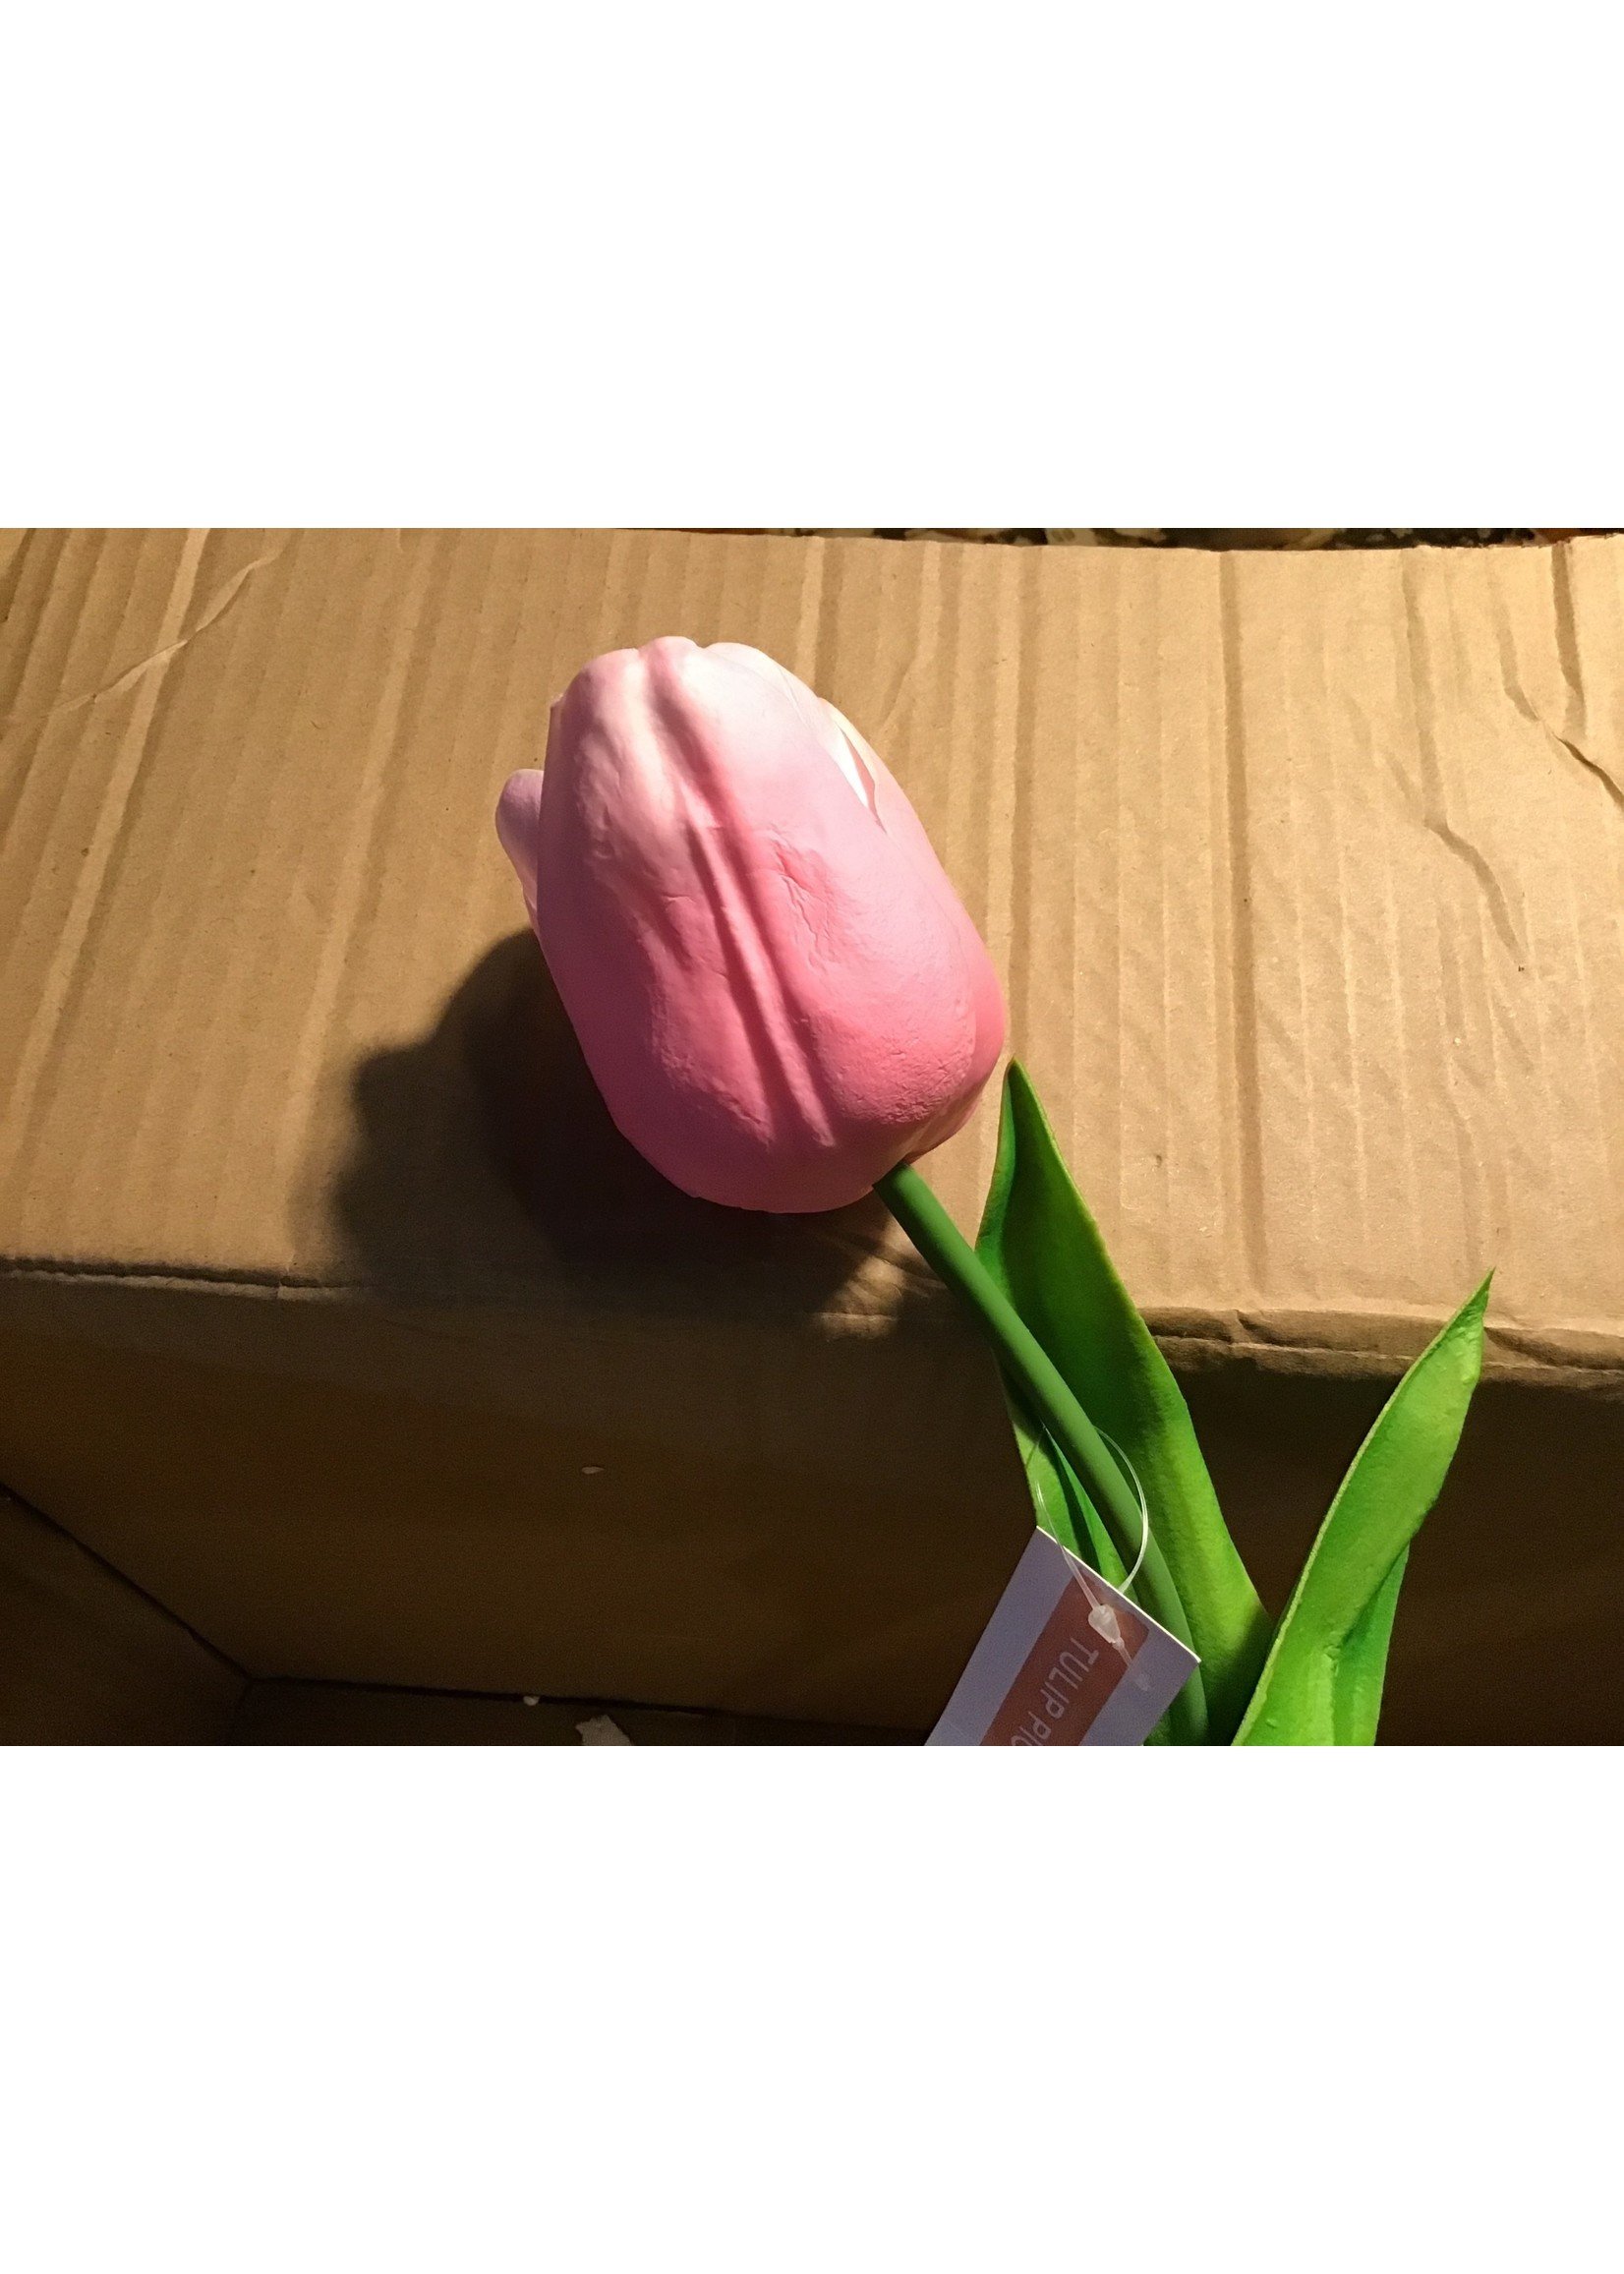 Floral pick - pink tulip